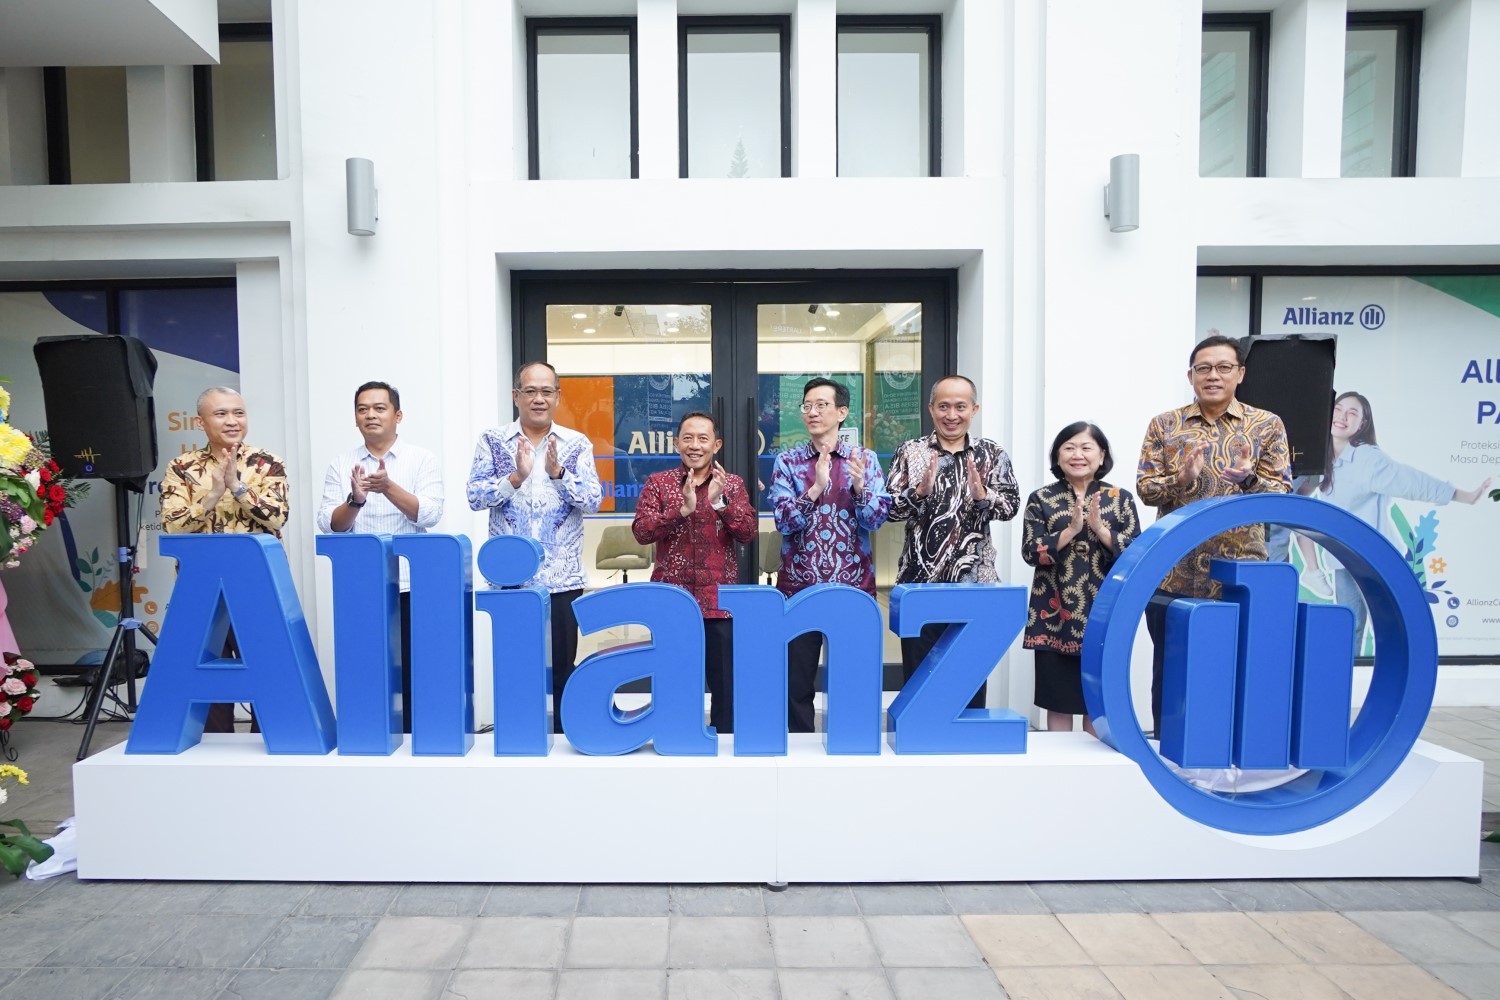 Percaya Kekuatan Pertumbuhan Ekonomi Jawa Barat, Allianz Indonesia Resmikan Allianz Center Bandung